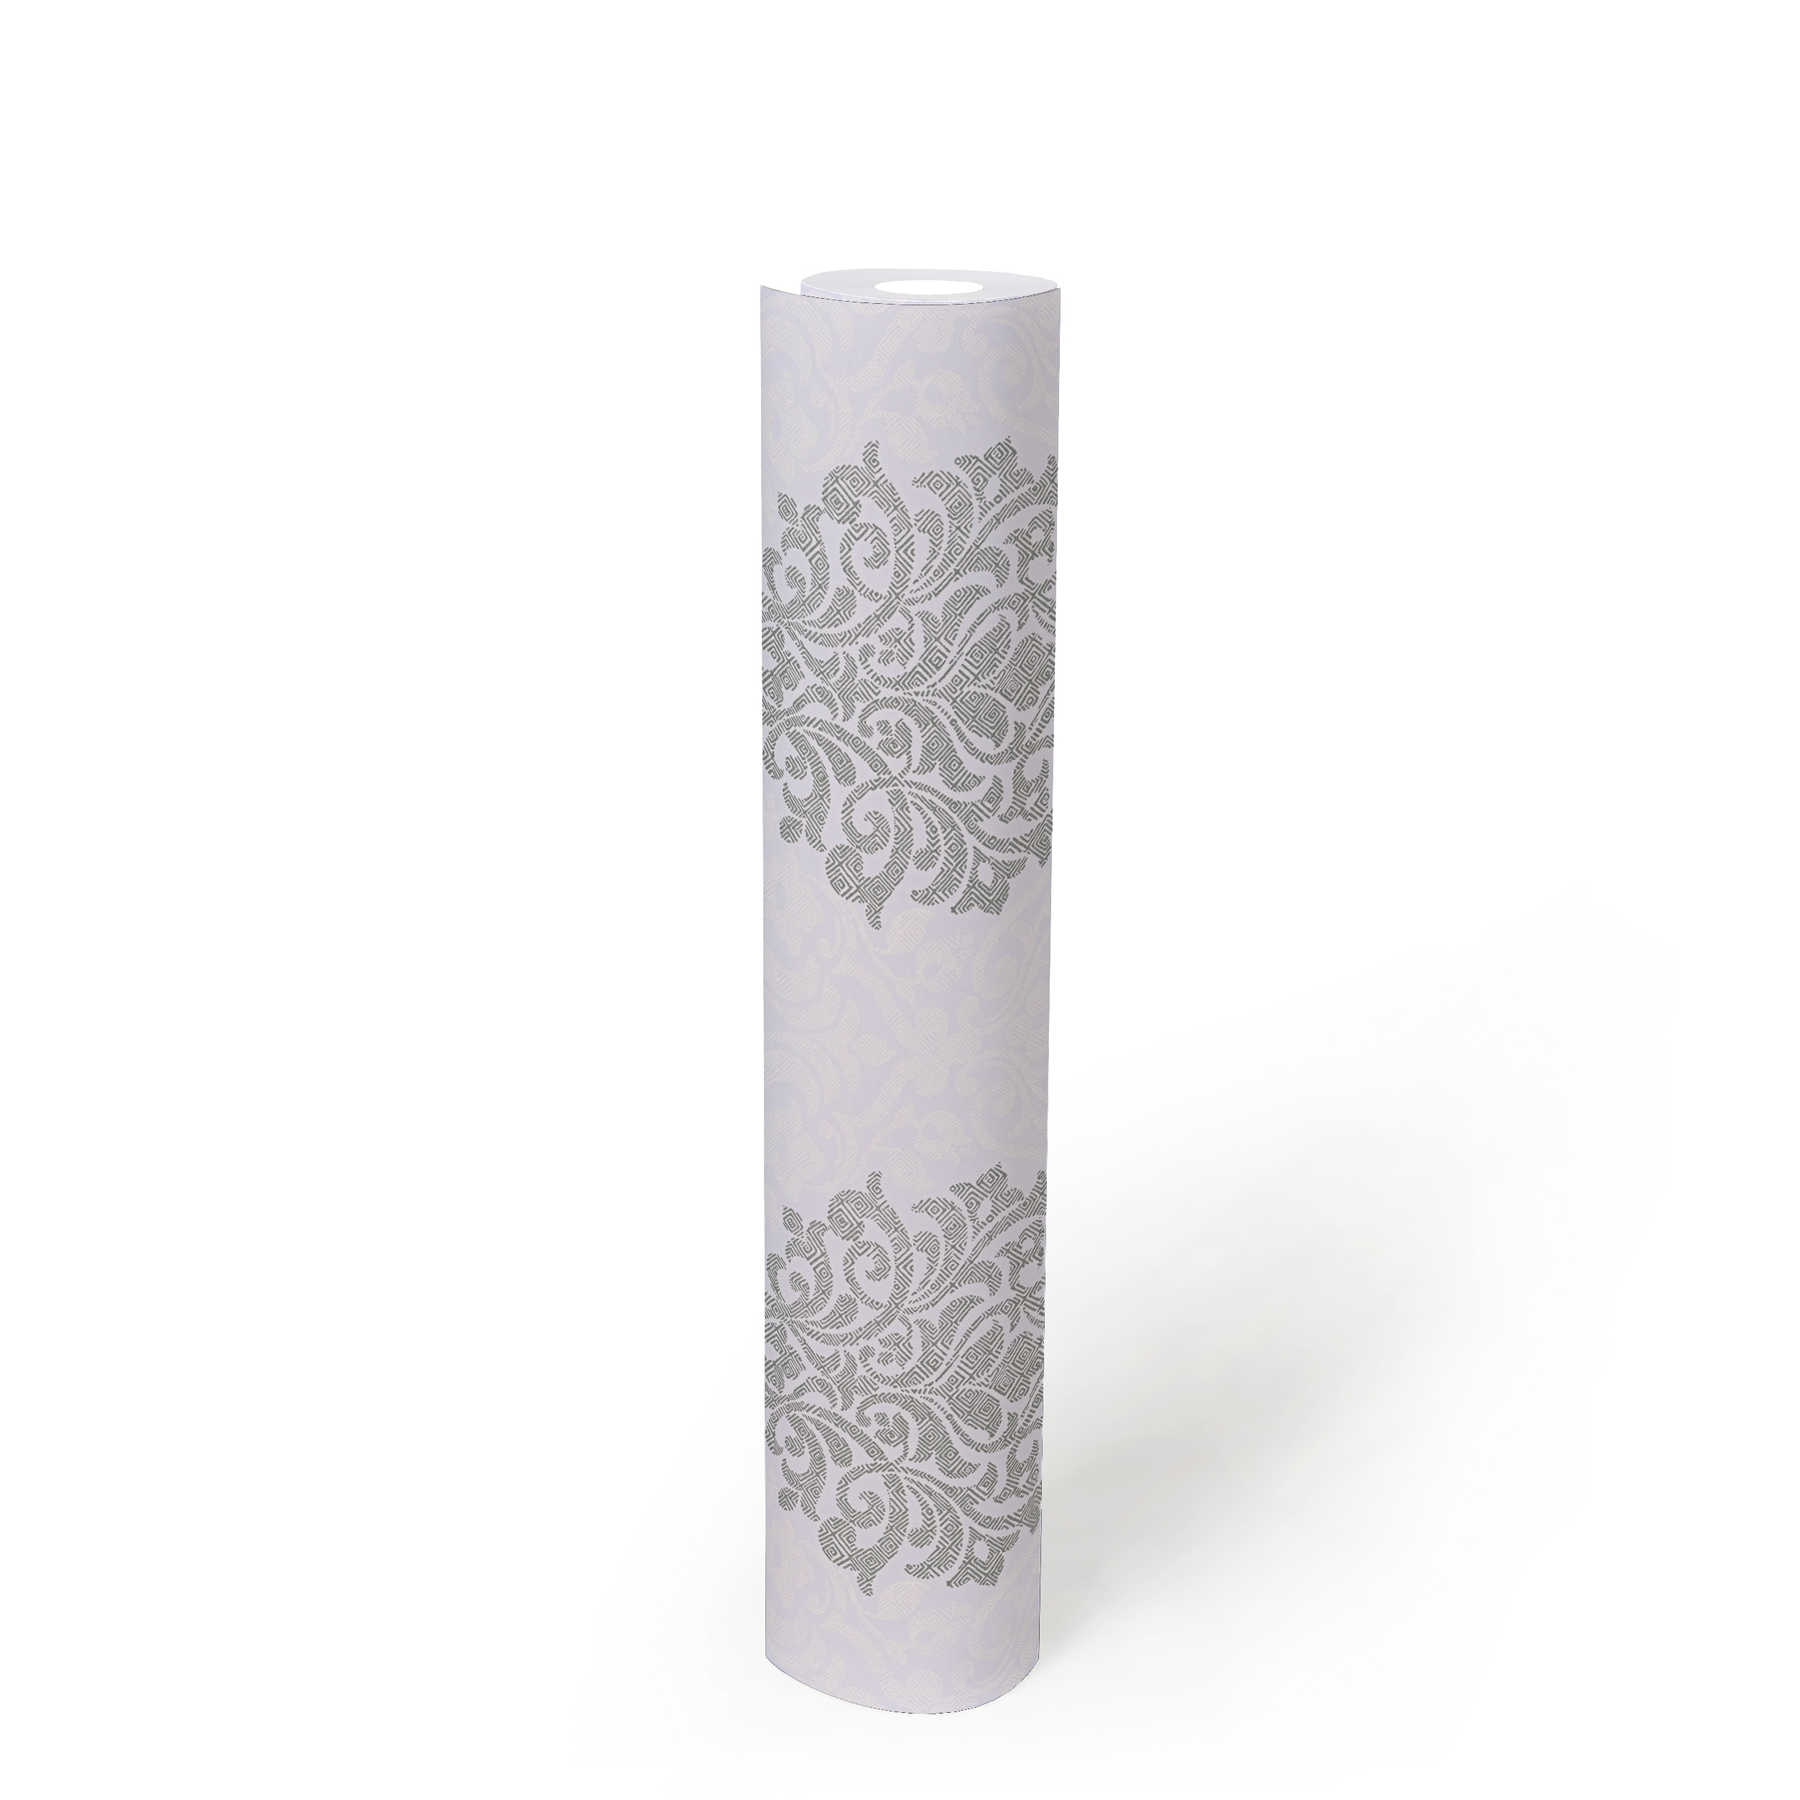             Floral ornamental wallpaper diamond pattern in ethnic style - grey, white, silver
        